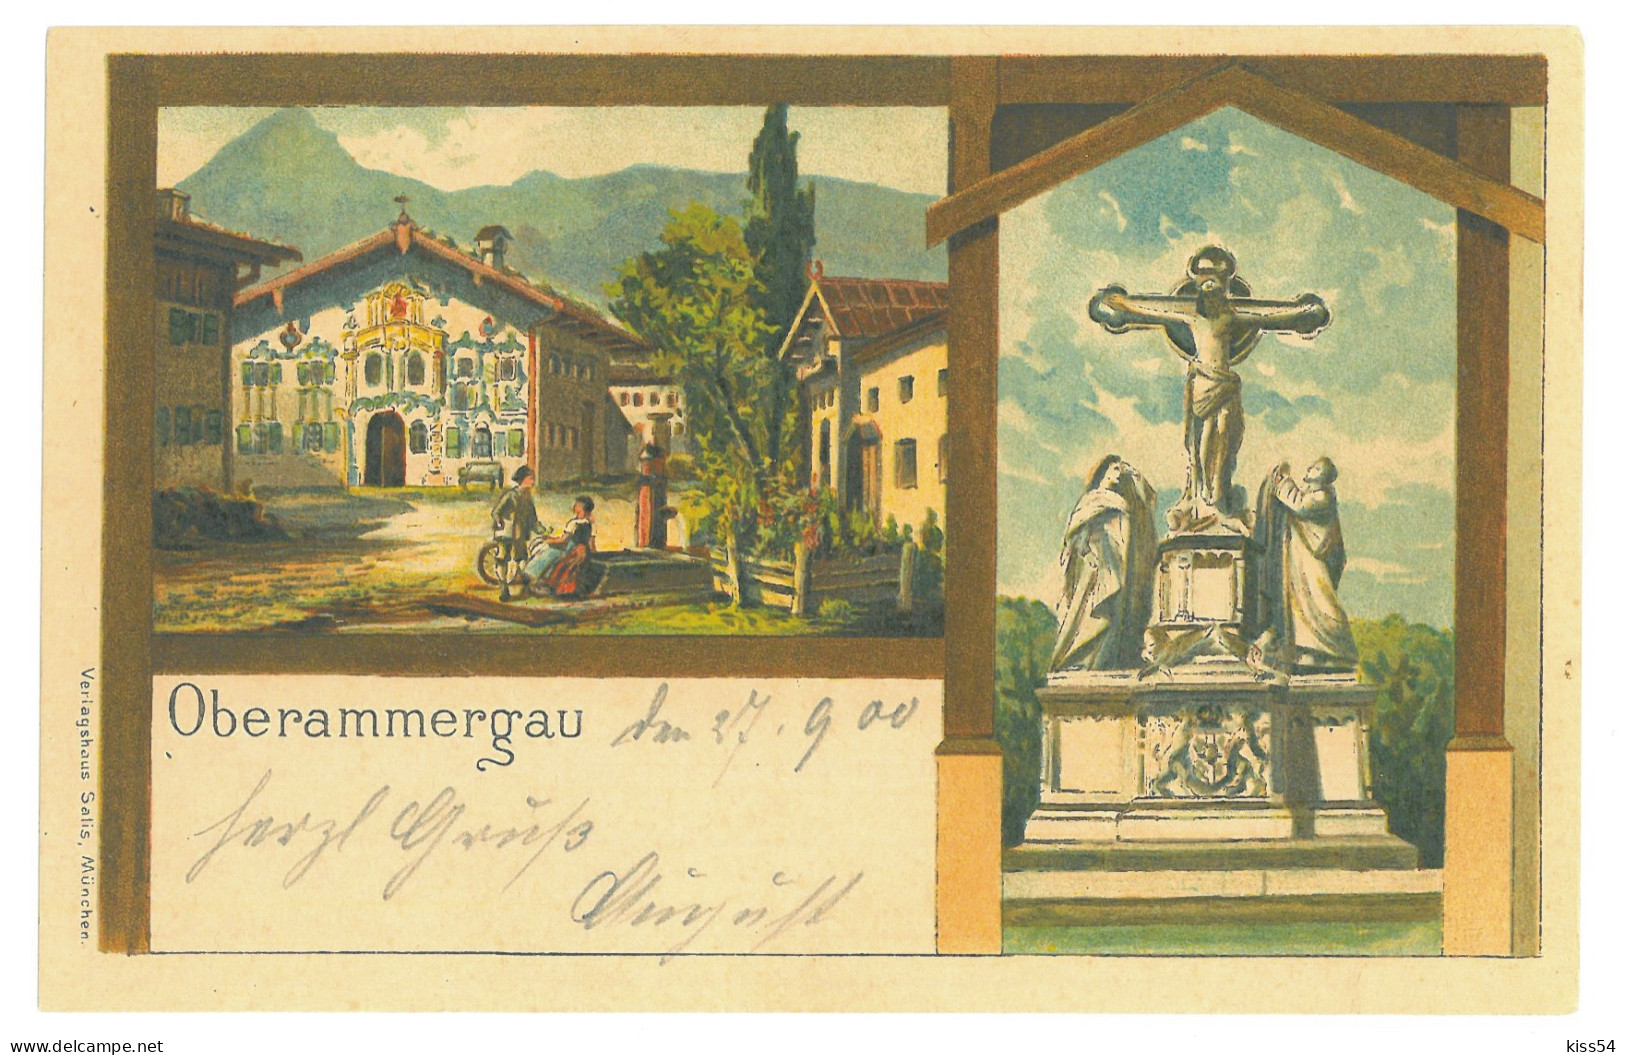 GER 05 - 17242 OBERAMMERGAU, Litho, Germany - Old Postcard - Used - 1900 - Oberammergau